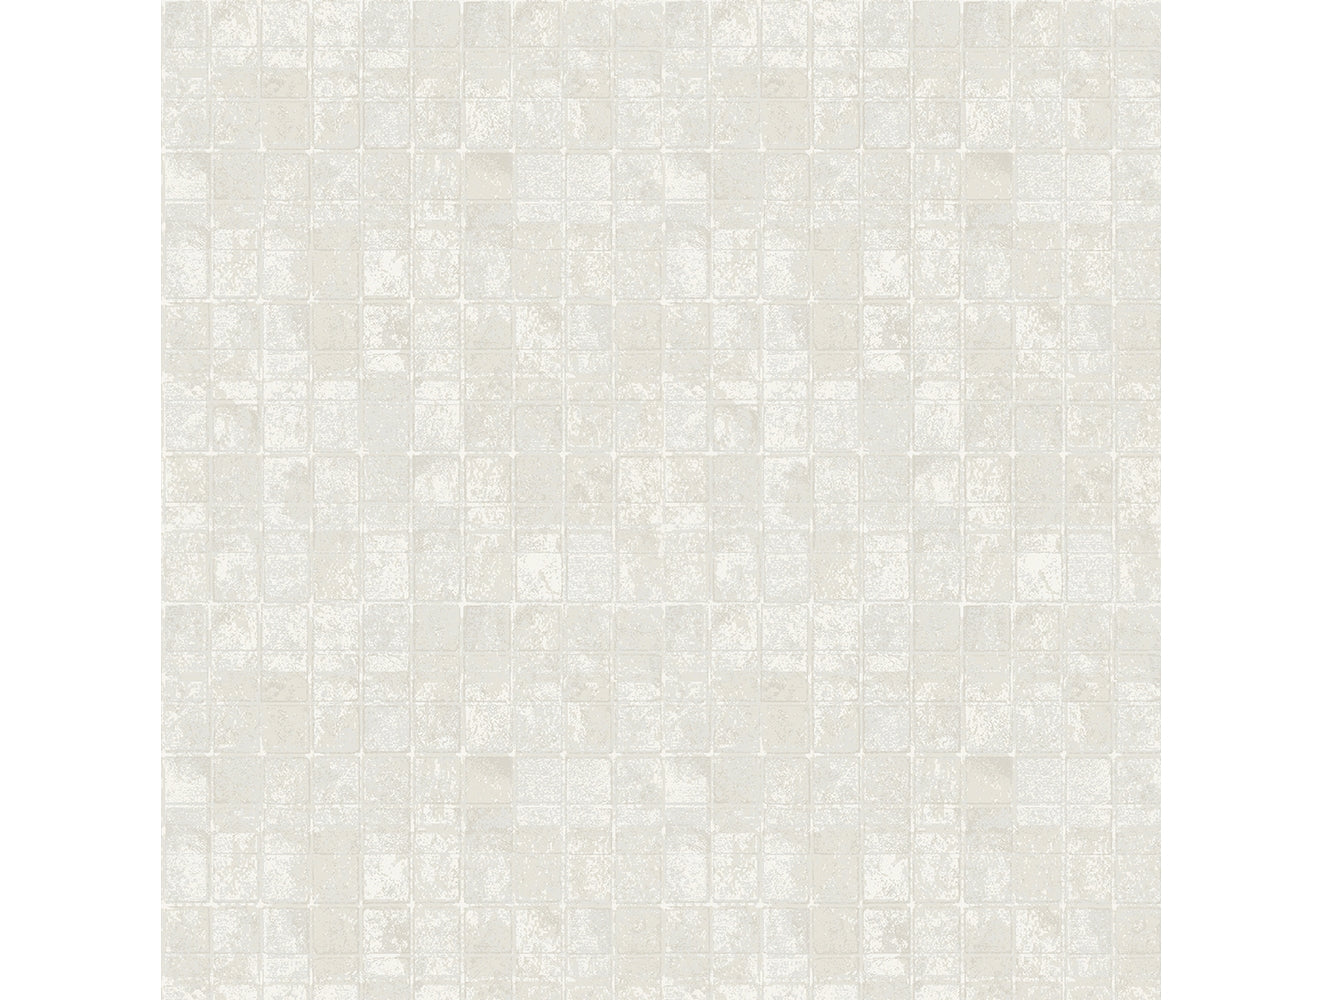 Small Tiles